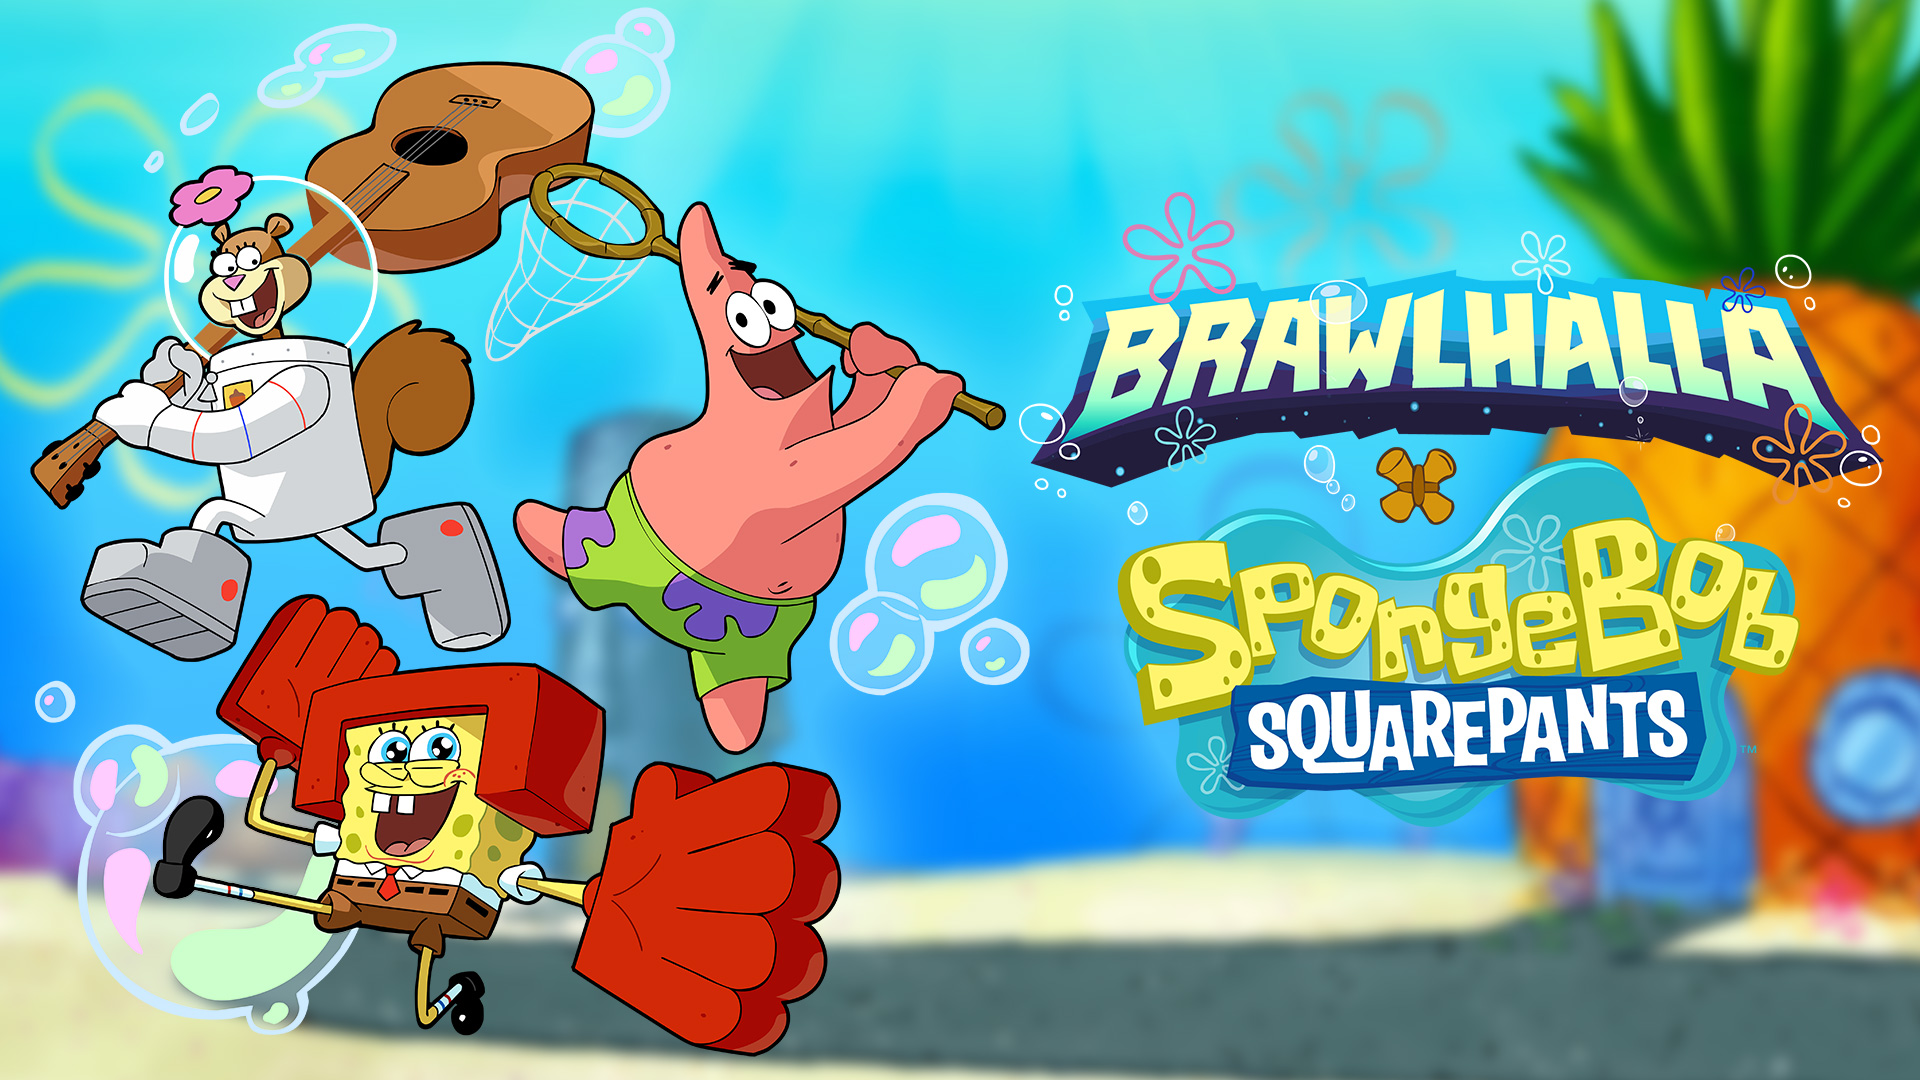 SpongeBob, Patrick and Sandy Will Make Their Way Into Brawlhalla on November 29th!